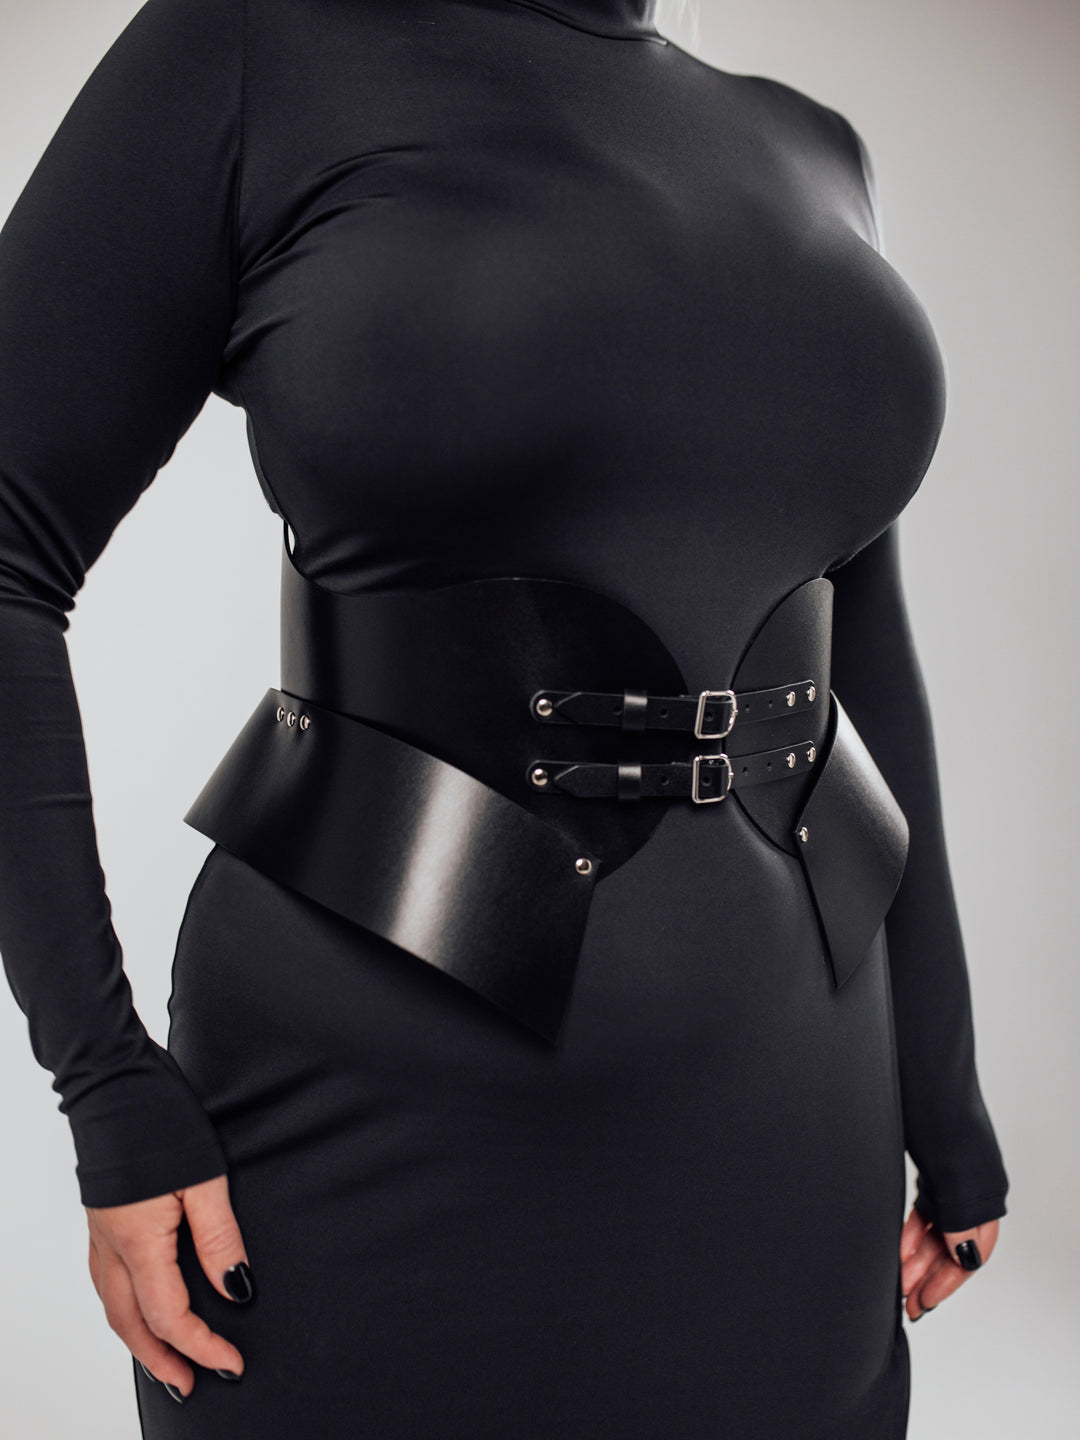 How to make a leather corset belt - Bleak&Sleek, USA